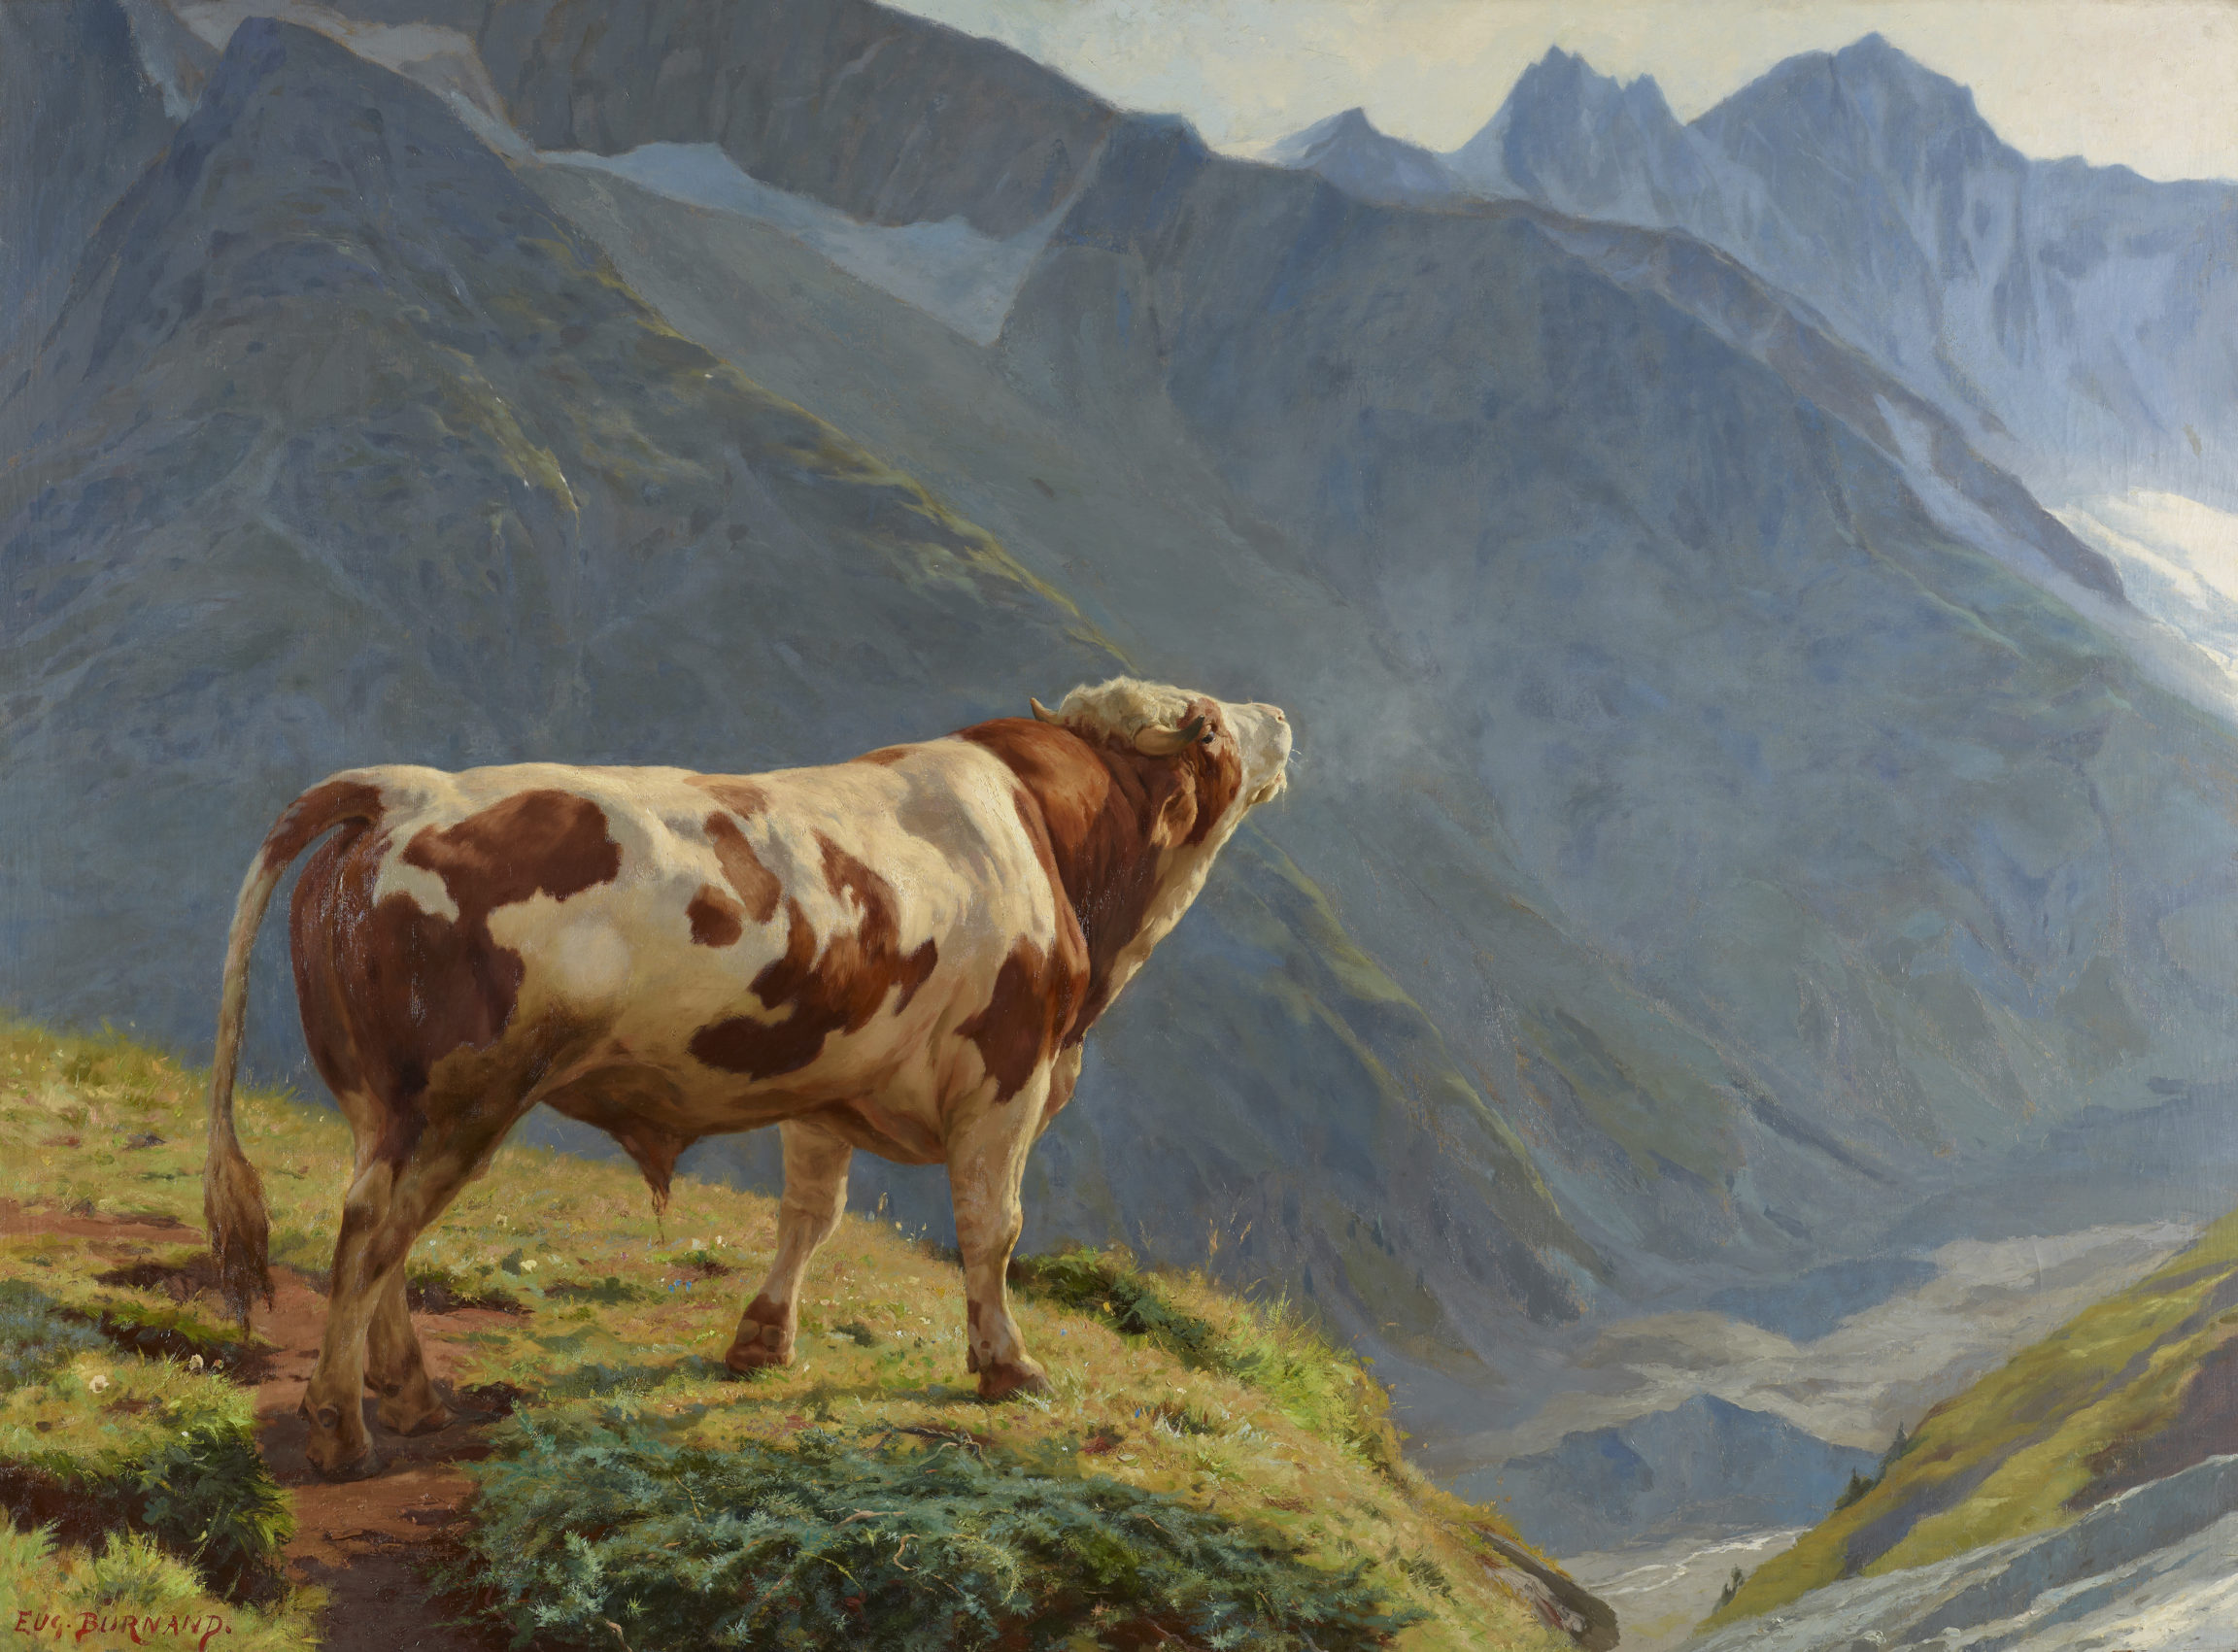 Eugène Burnand, Taureau dans les Alpes (Bull in the Alps), 1884